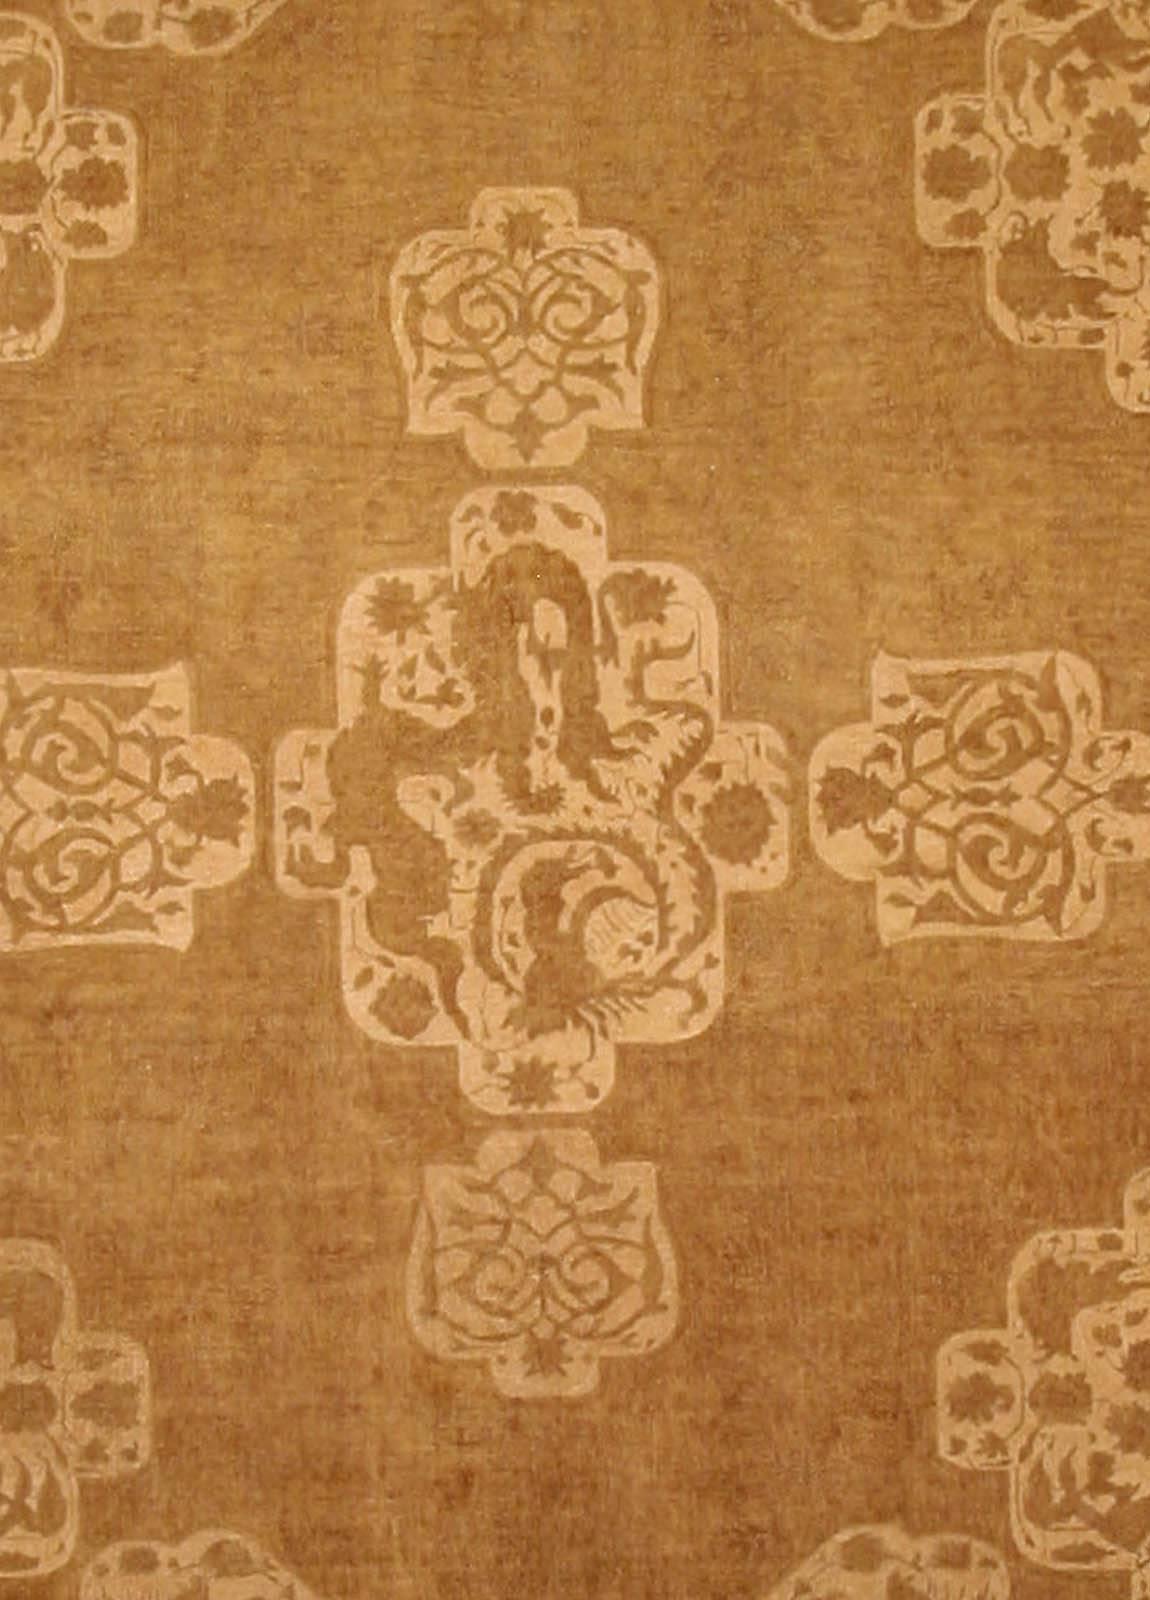 Antique Indian Amritsar Tan Background Handmade Wool Rug
Size: 12'1